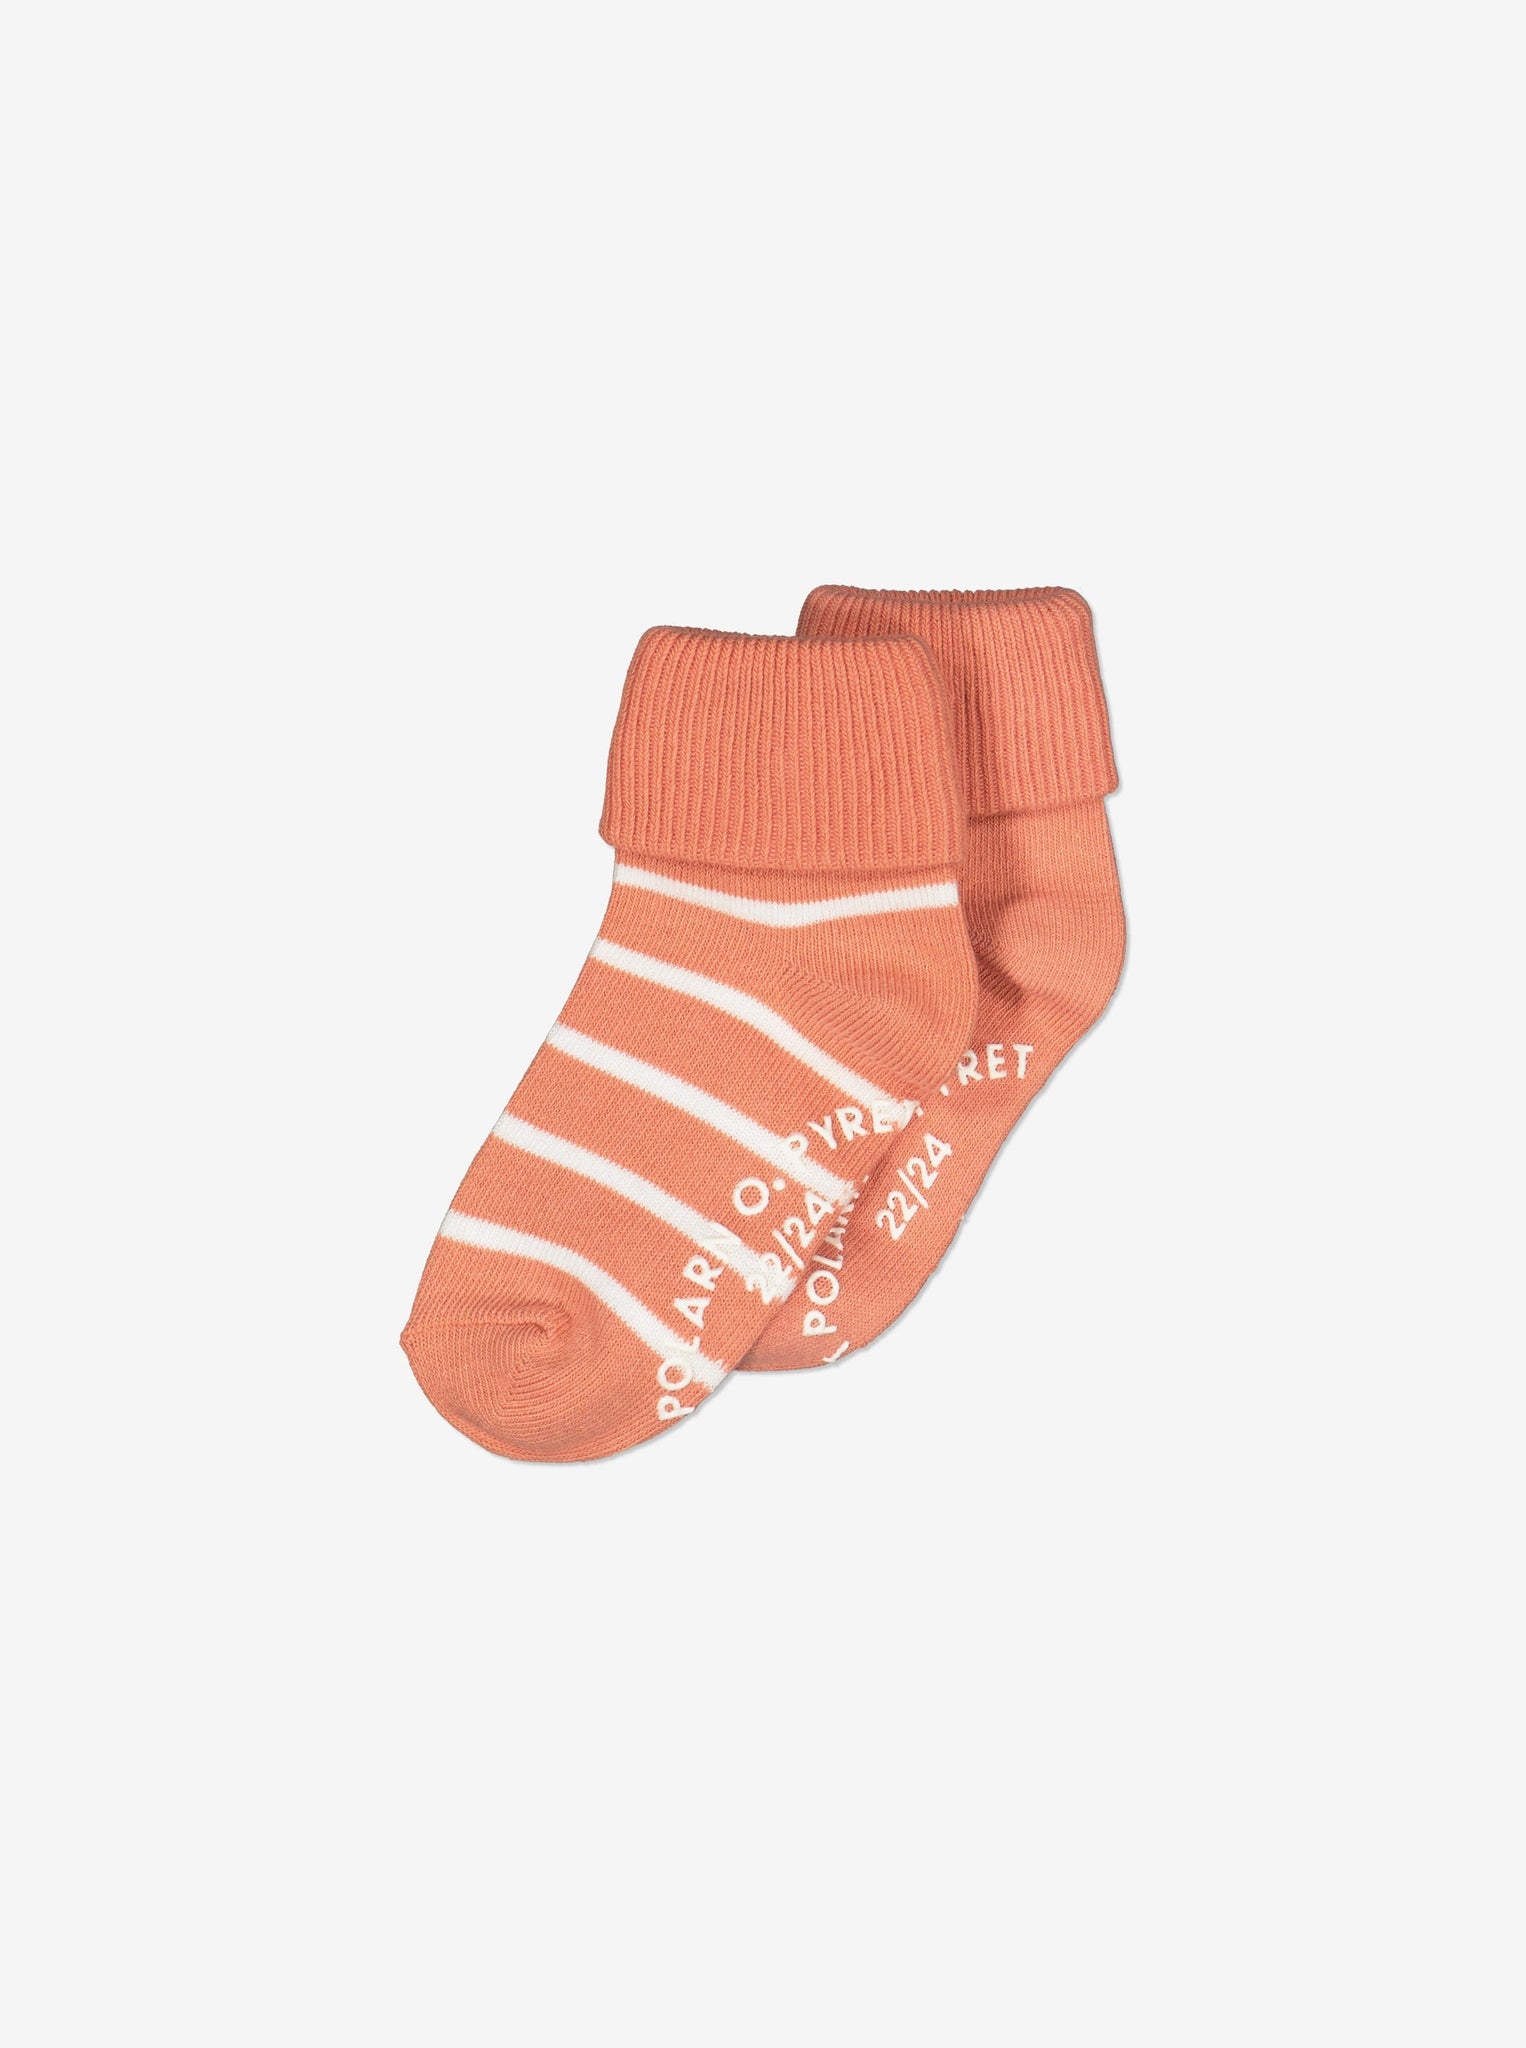  Coral Kids Antislip Socks from Polarn O. Pyret Kidswear. Made using environmentally friendly materials.